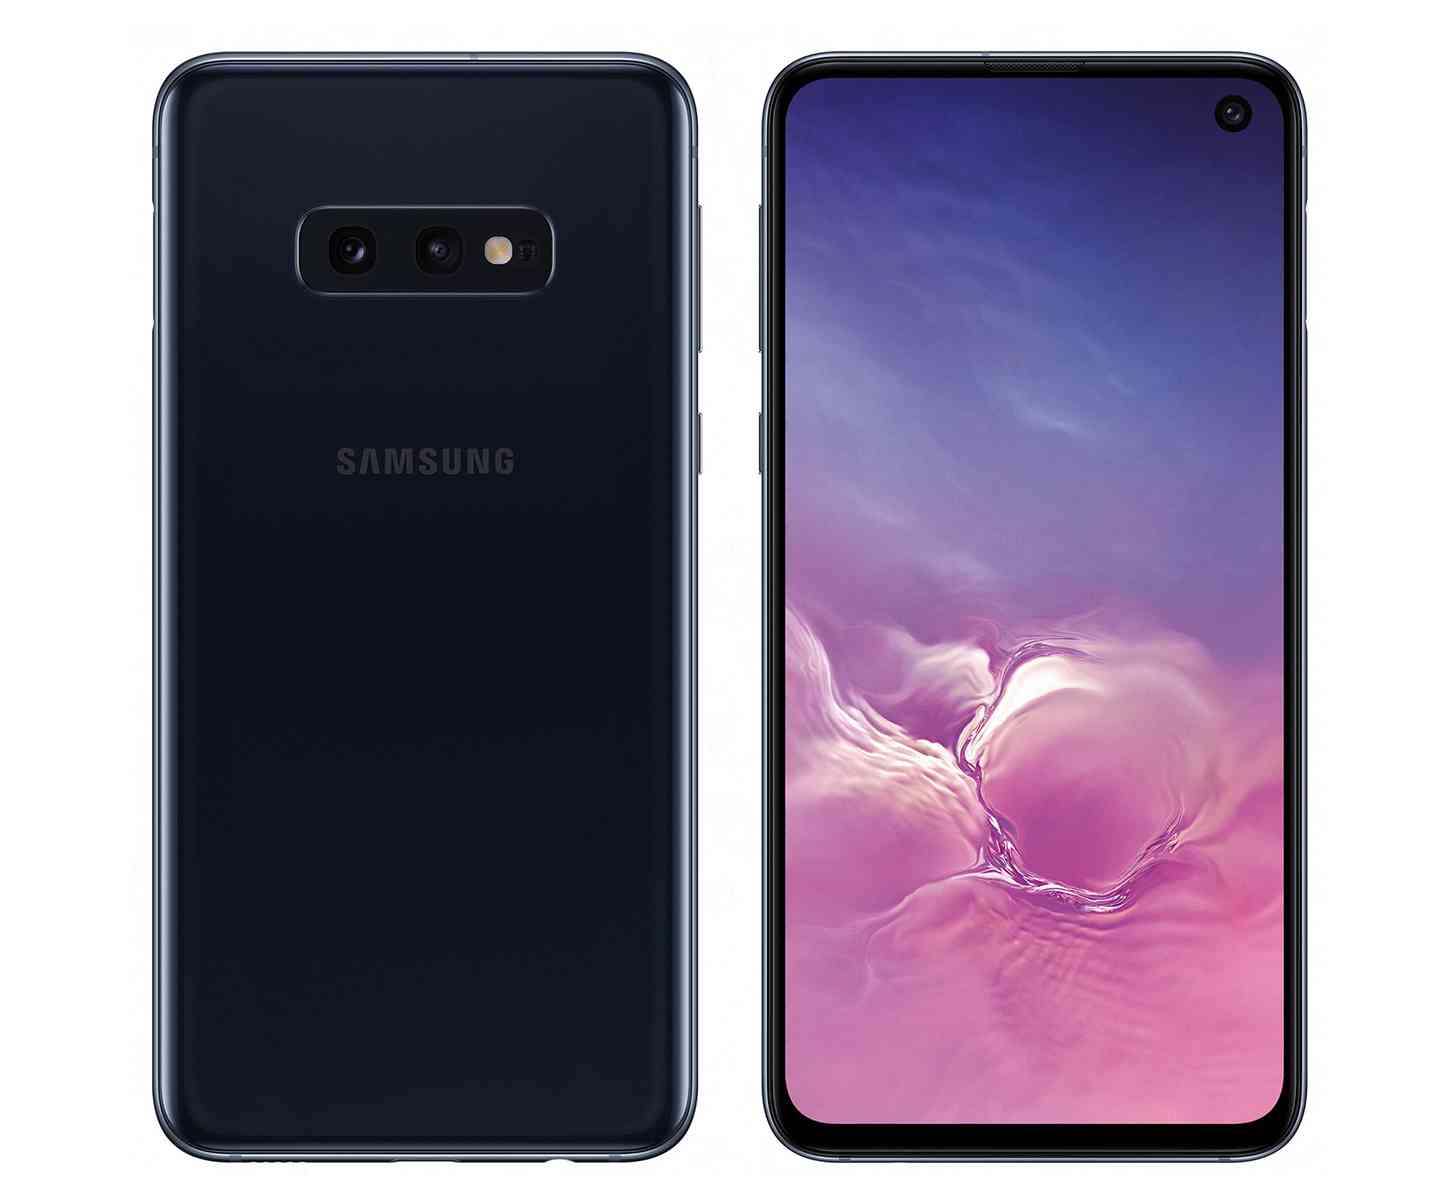 Samsung Galaxy S10e renders